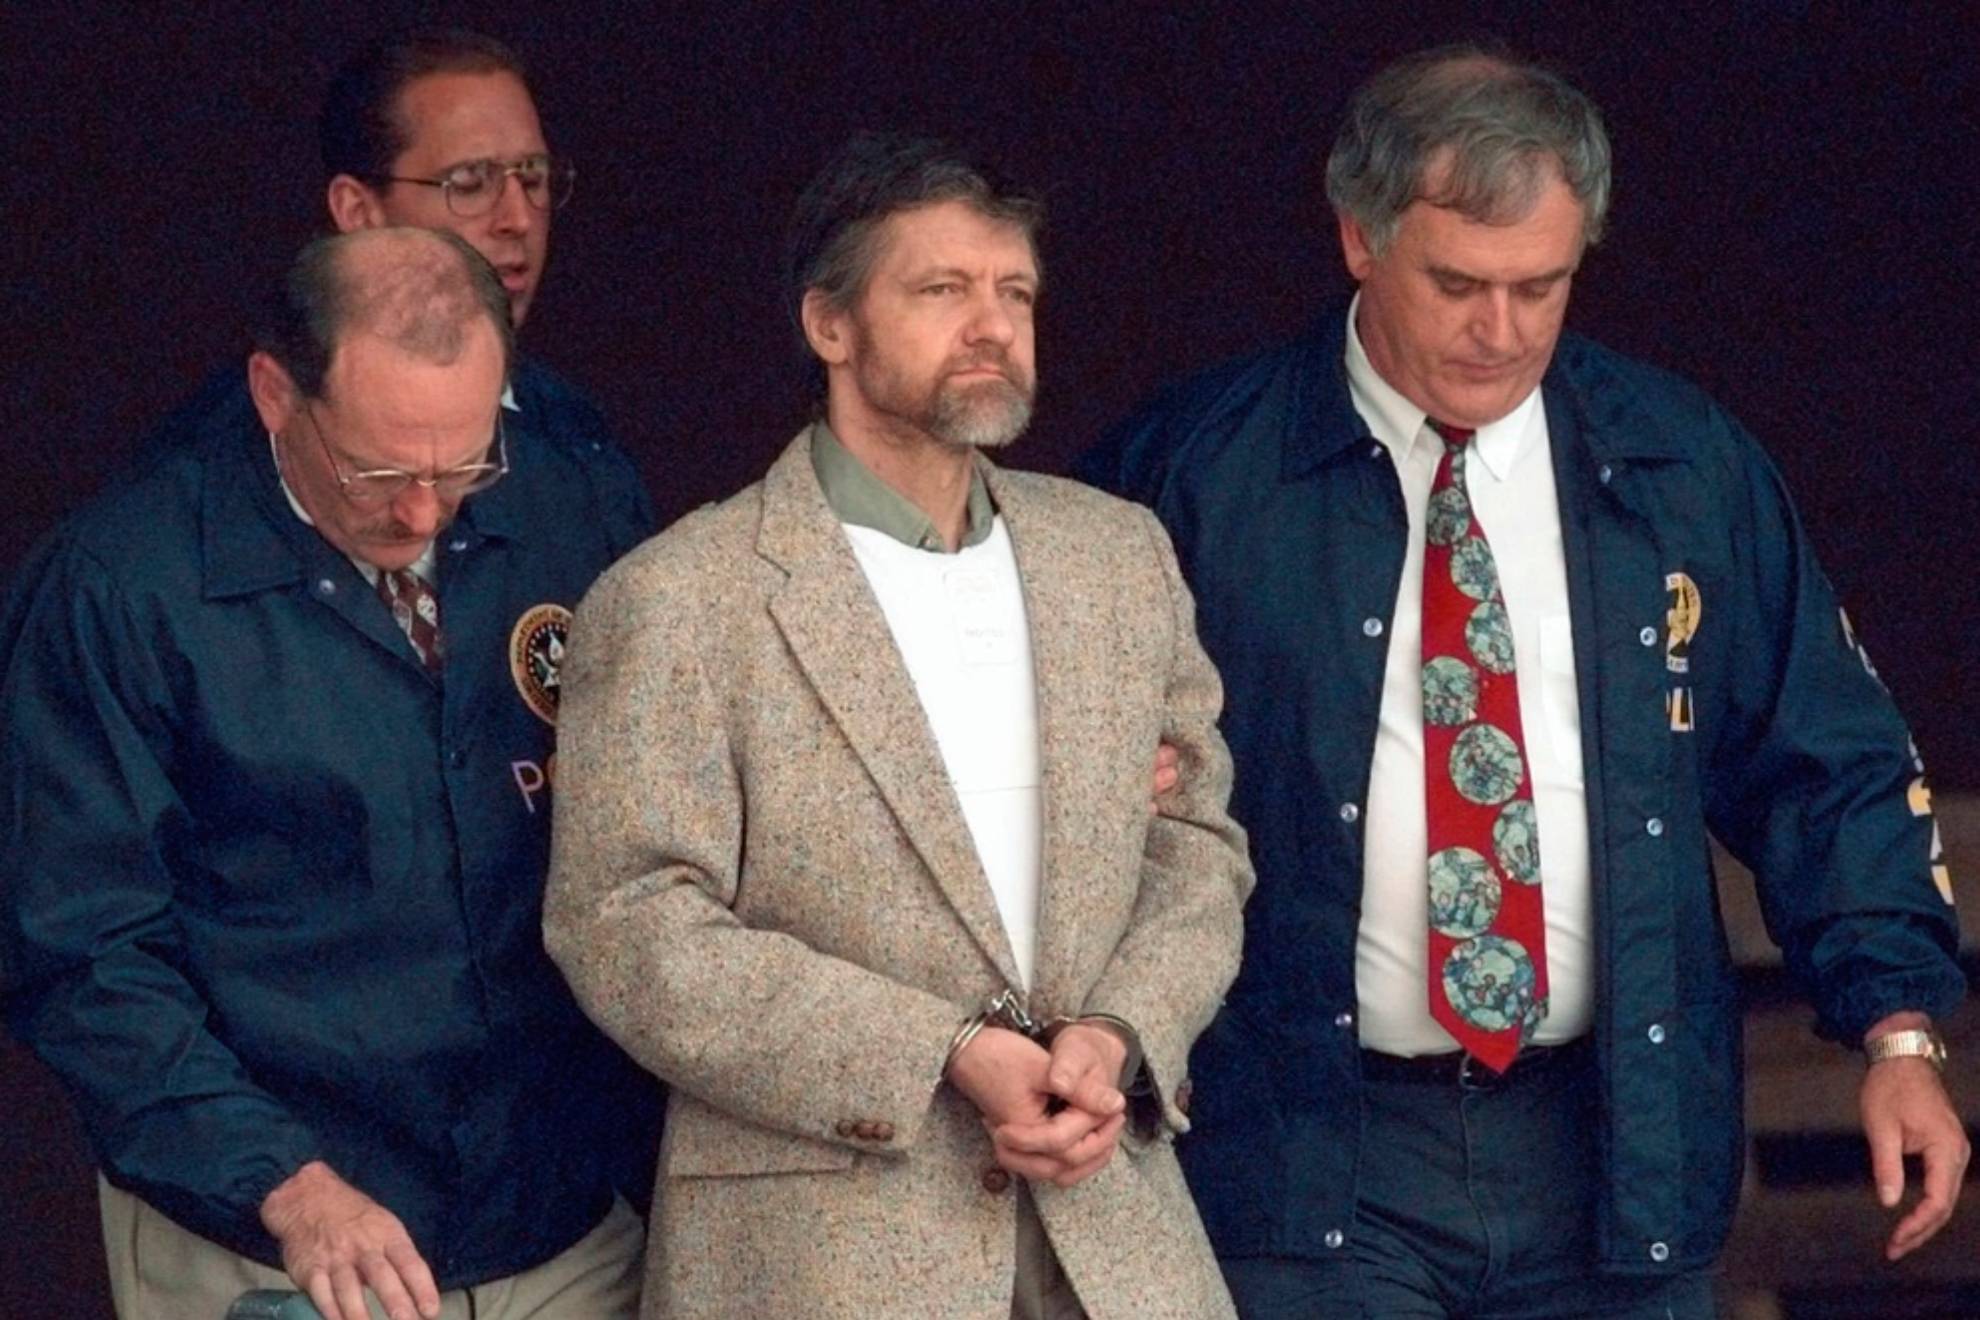 Theodore Kaczynski looks around as U.S. Marshals prepare to take him down